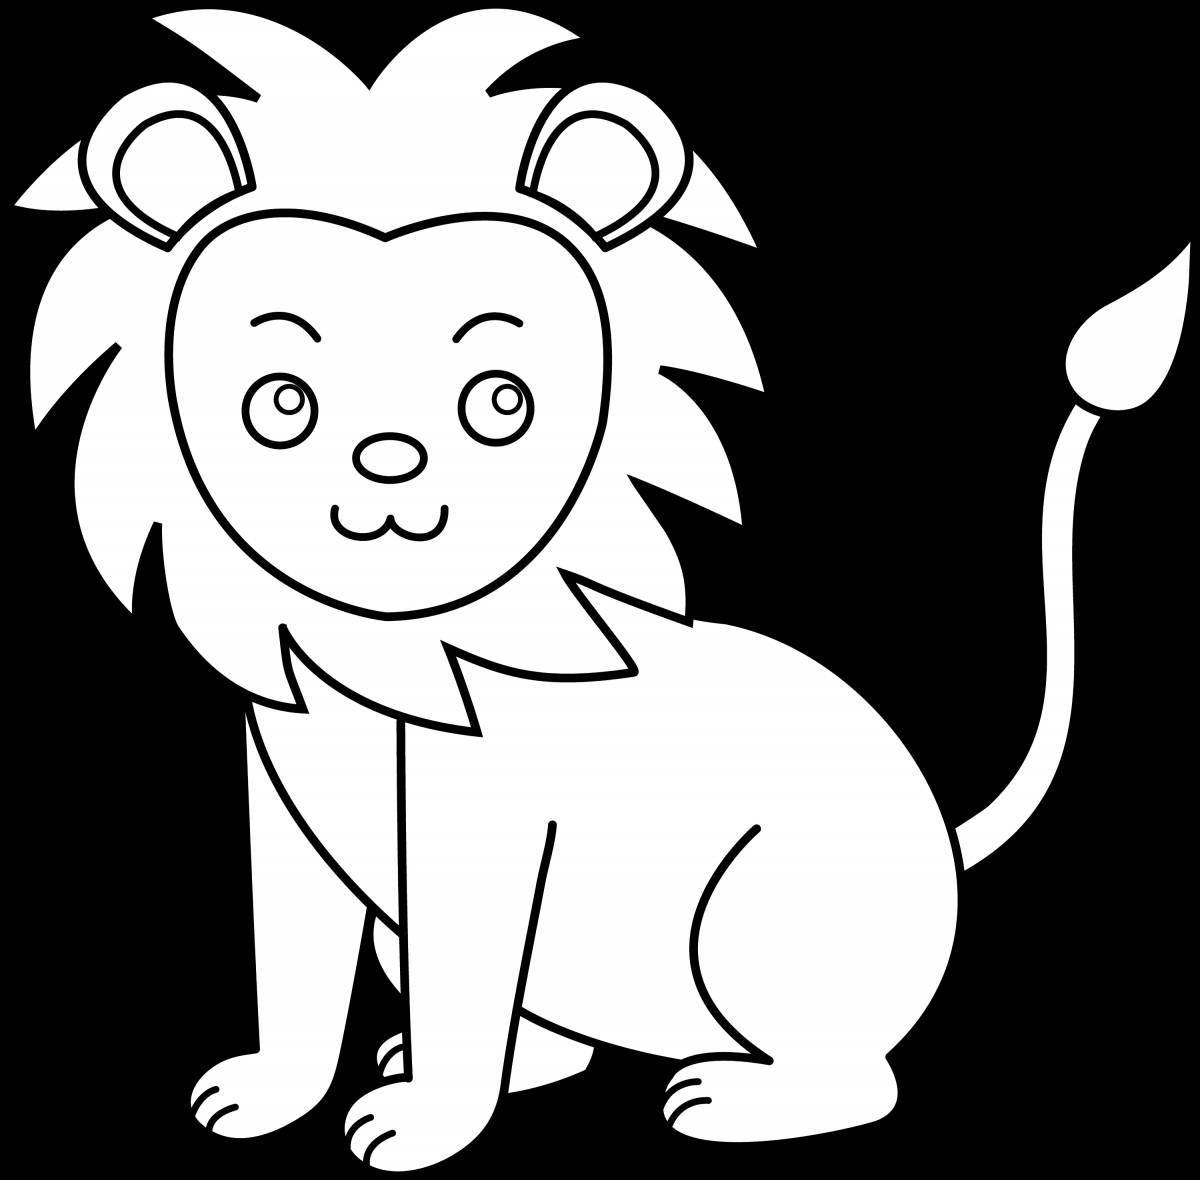 Ferocious lion coloring page for kids